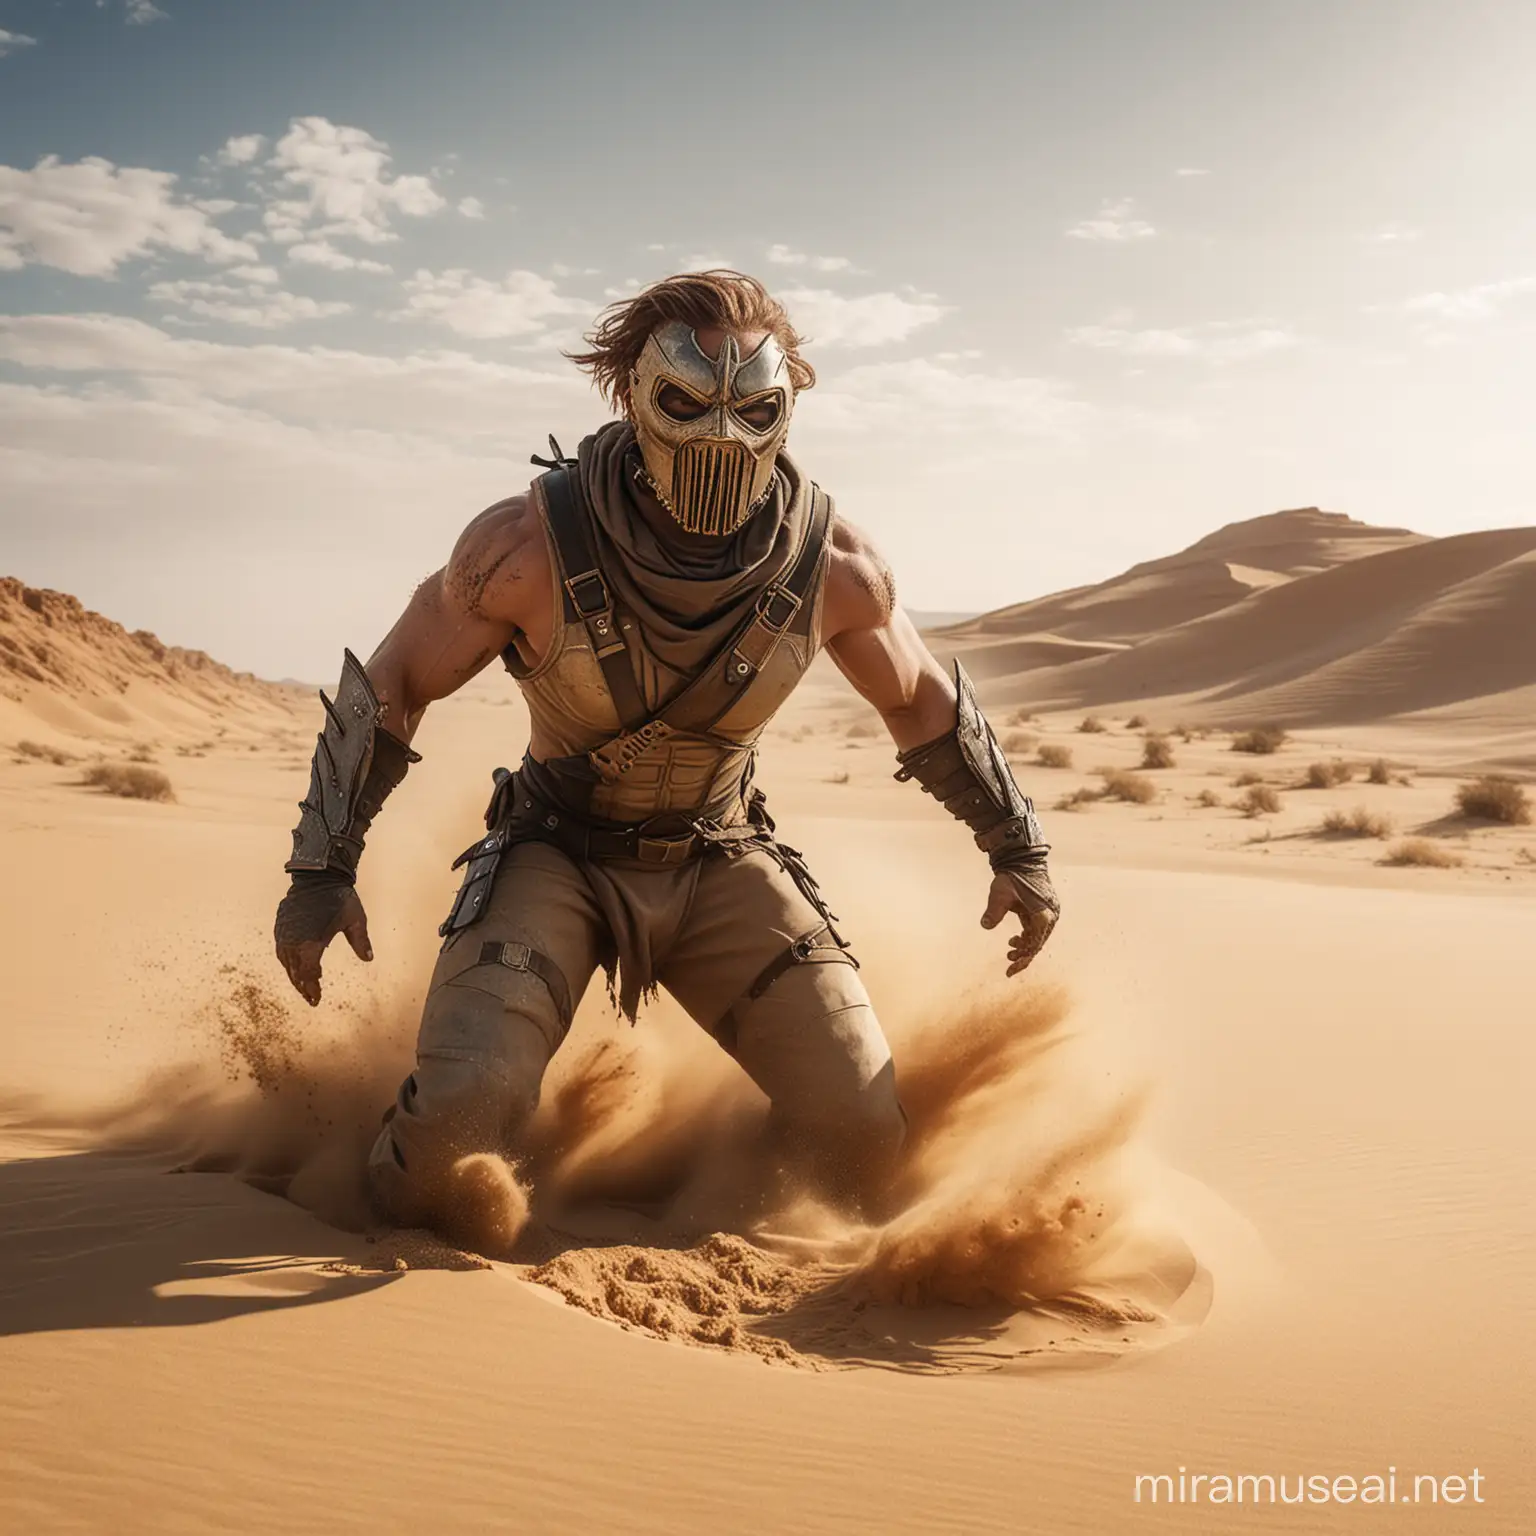 Mysterious Mutant Warrior Emerges from Desert Sands